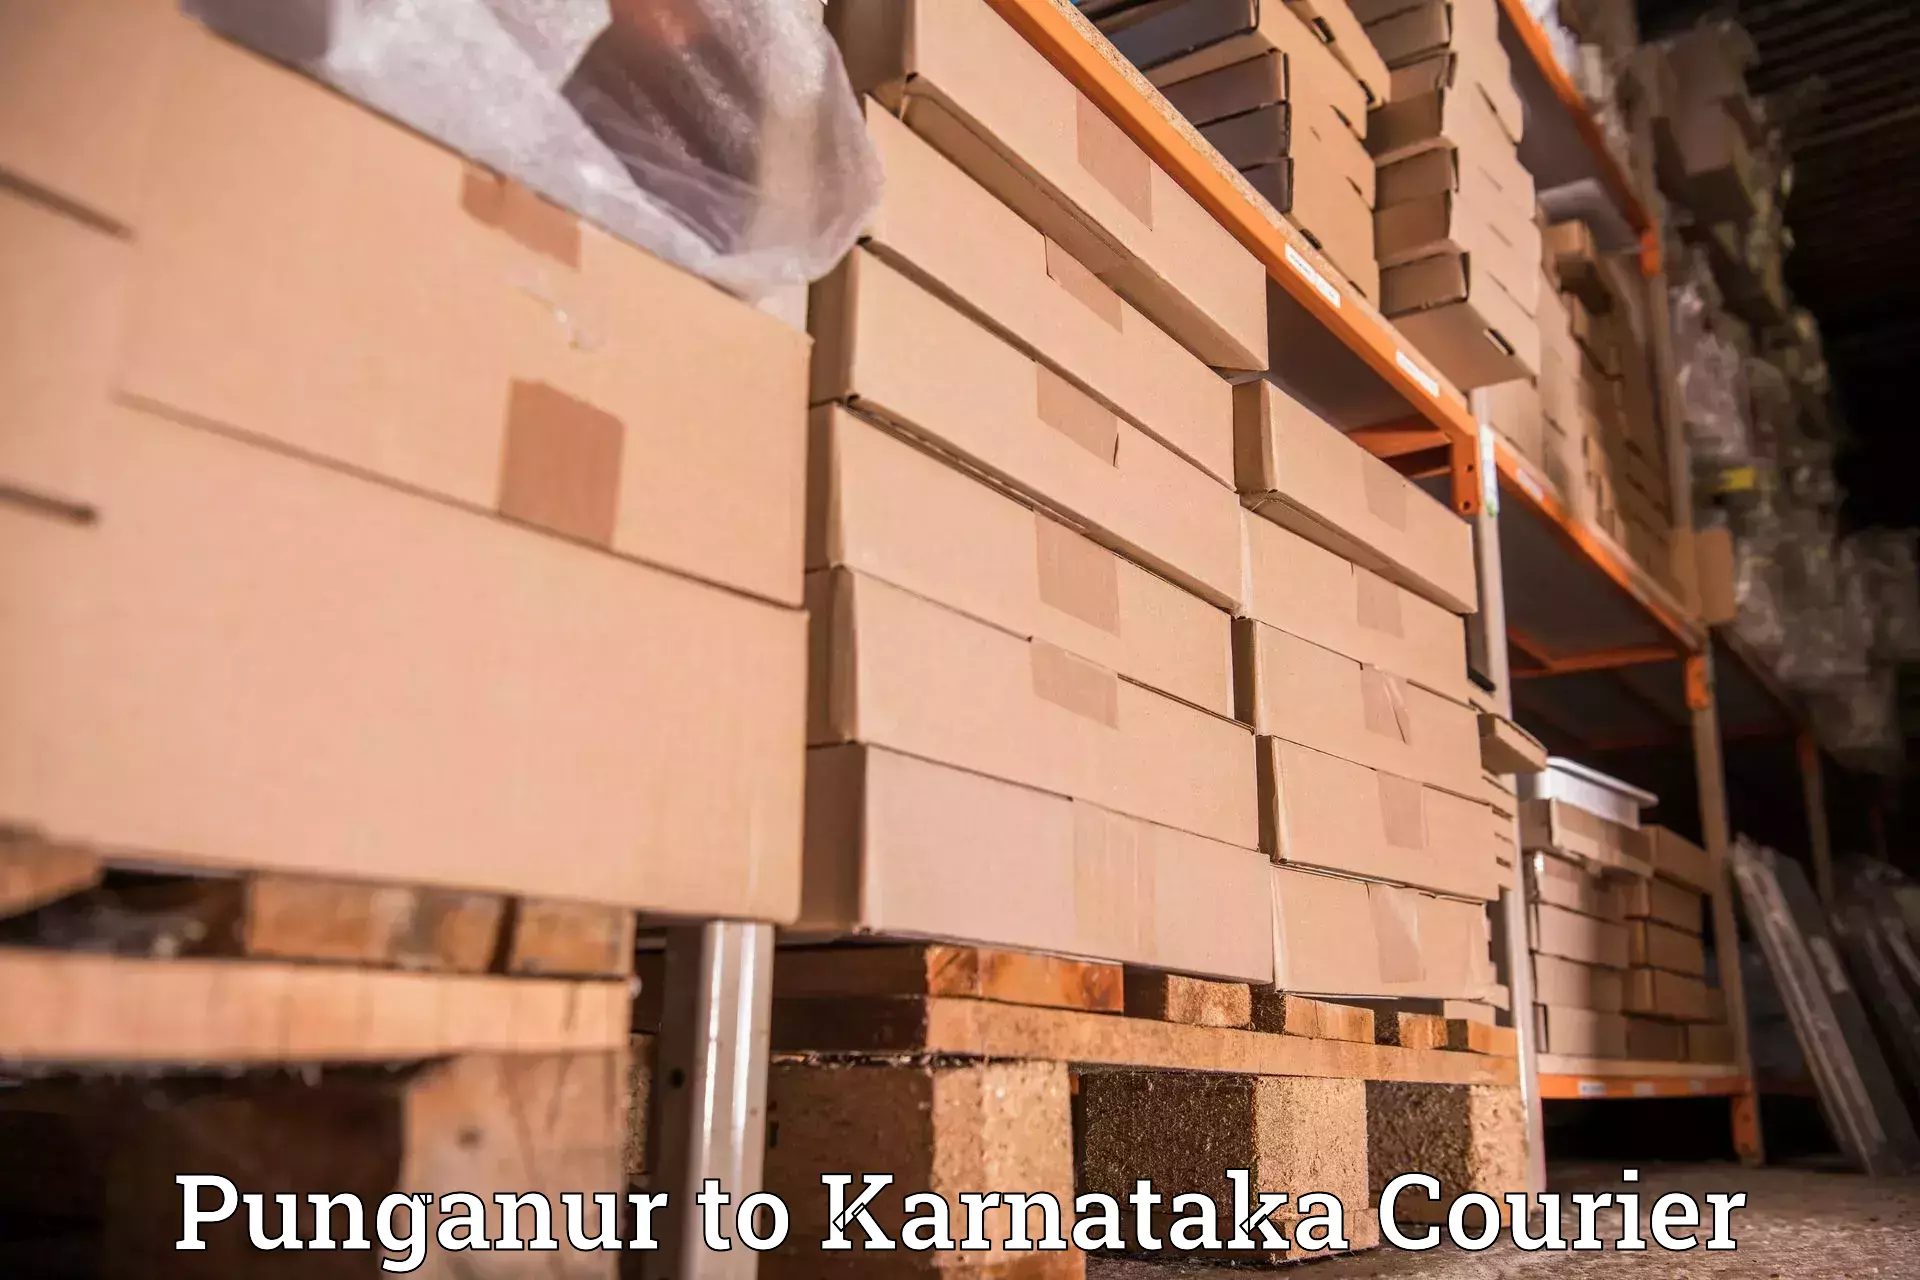 Courier service partnerships in Punganur to Madikeri